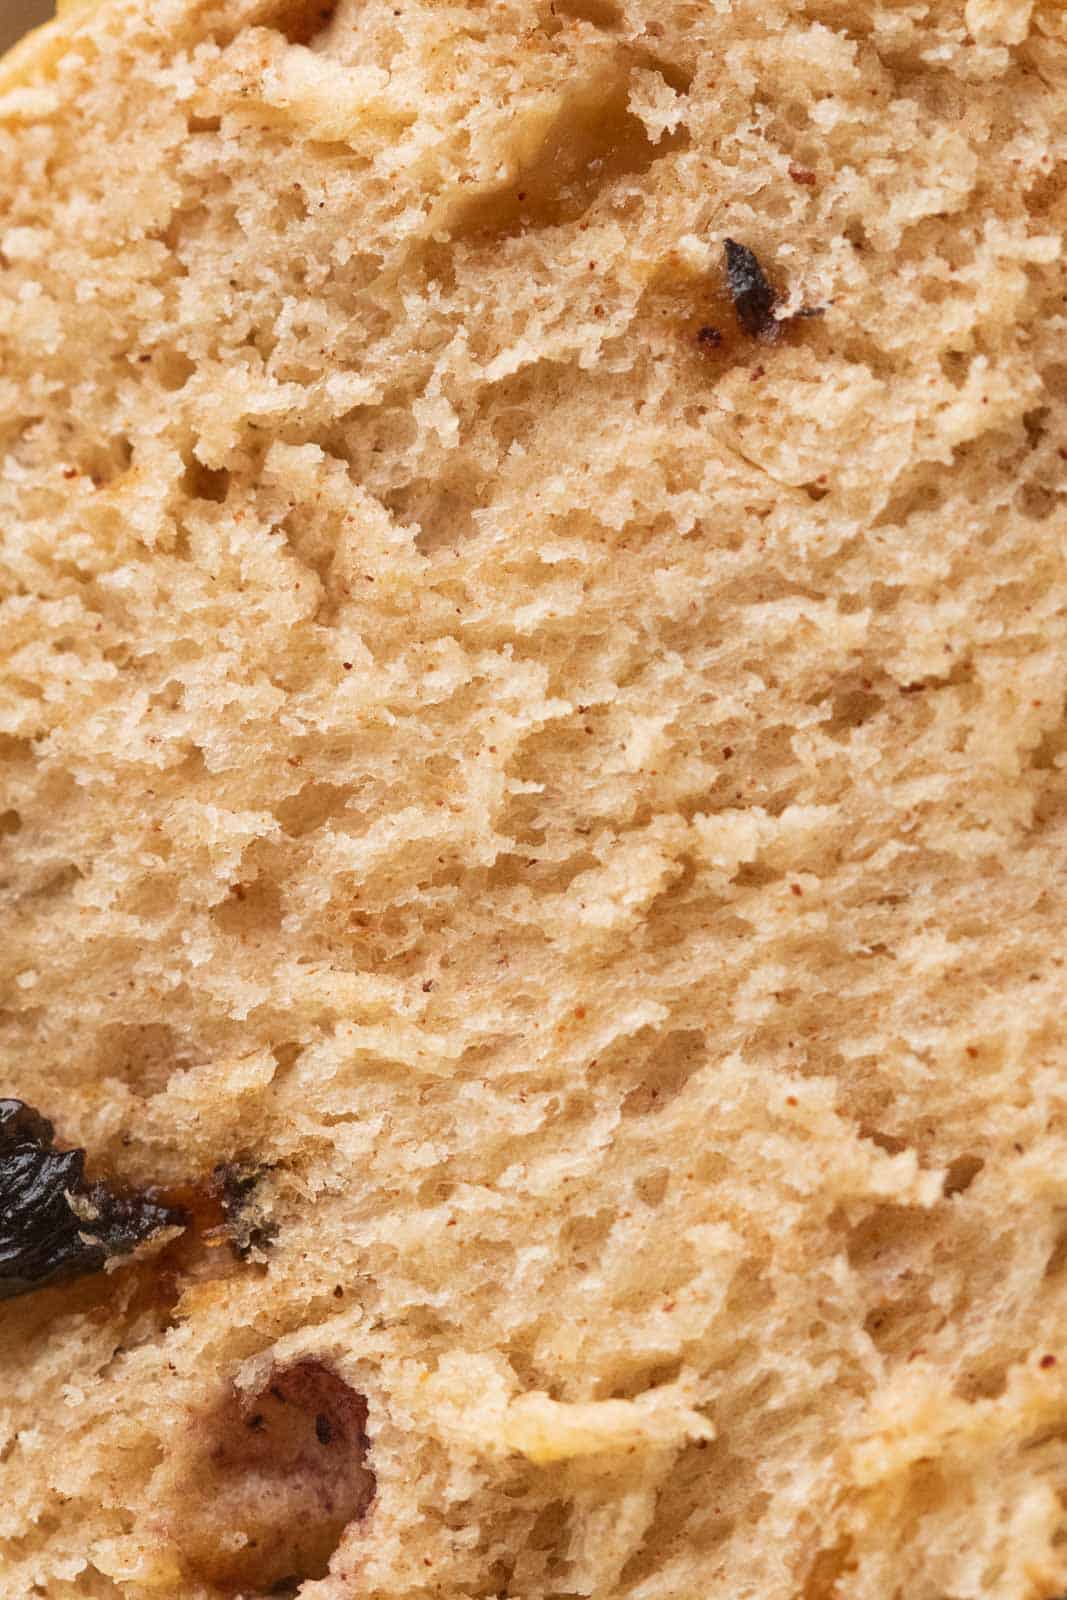 Closeup of the crumb of hot cross buns